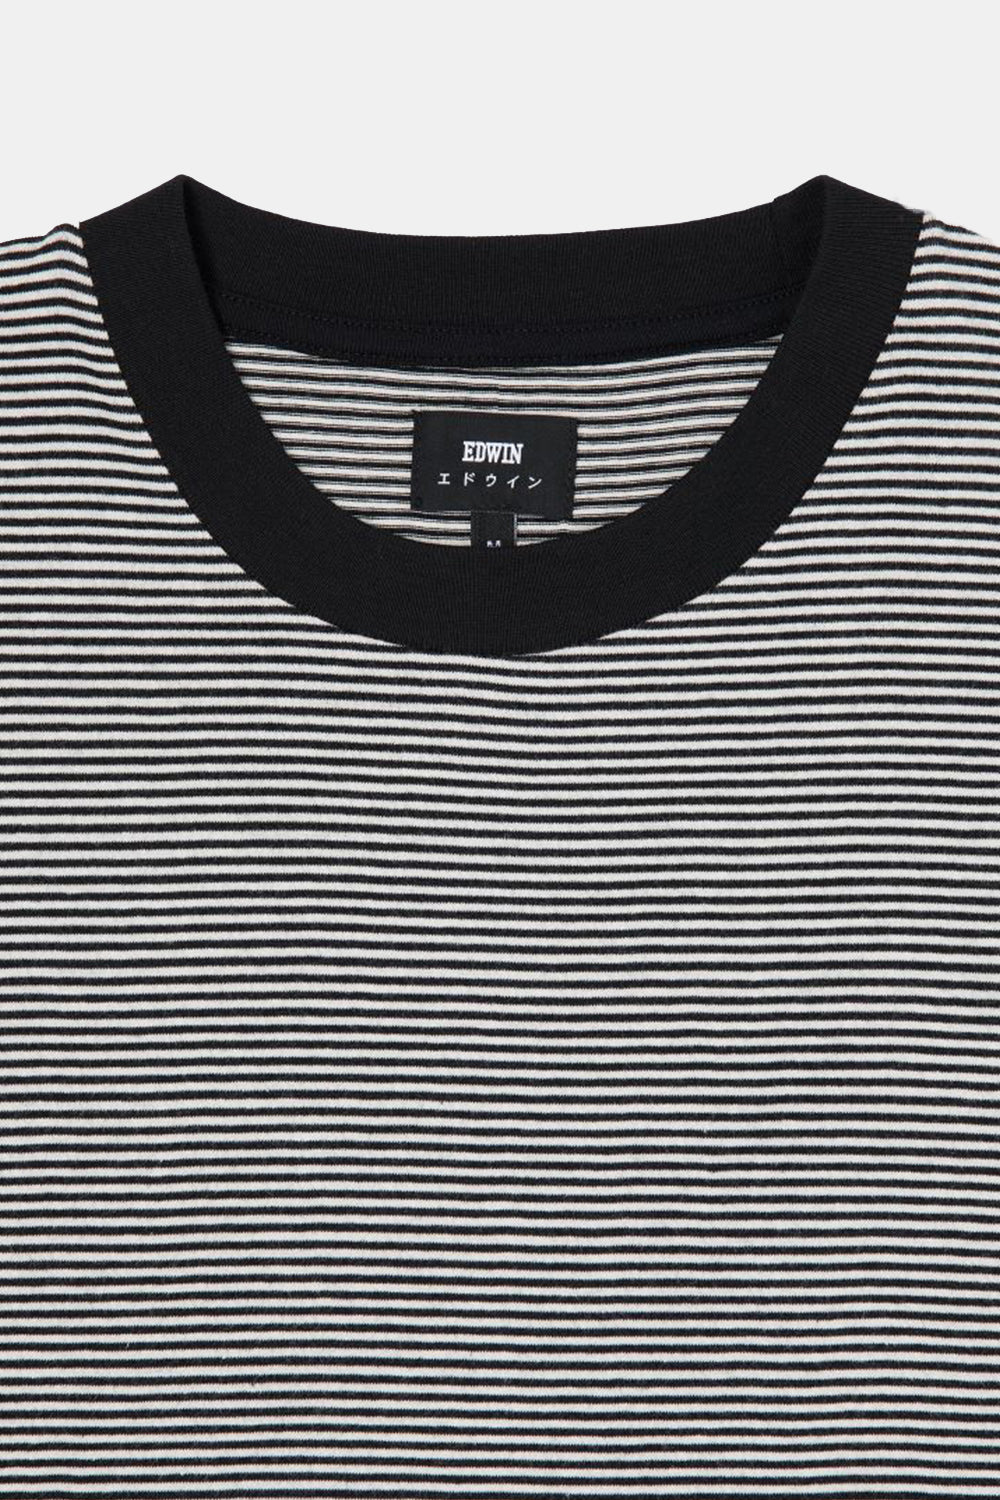 Edwin Adam Stripe T-Shirt (Black/White)